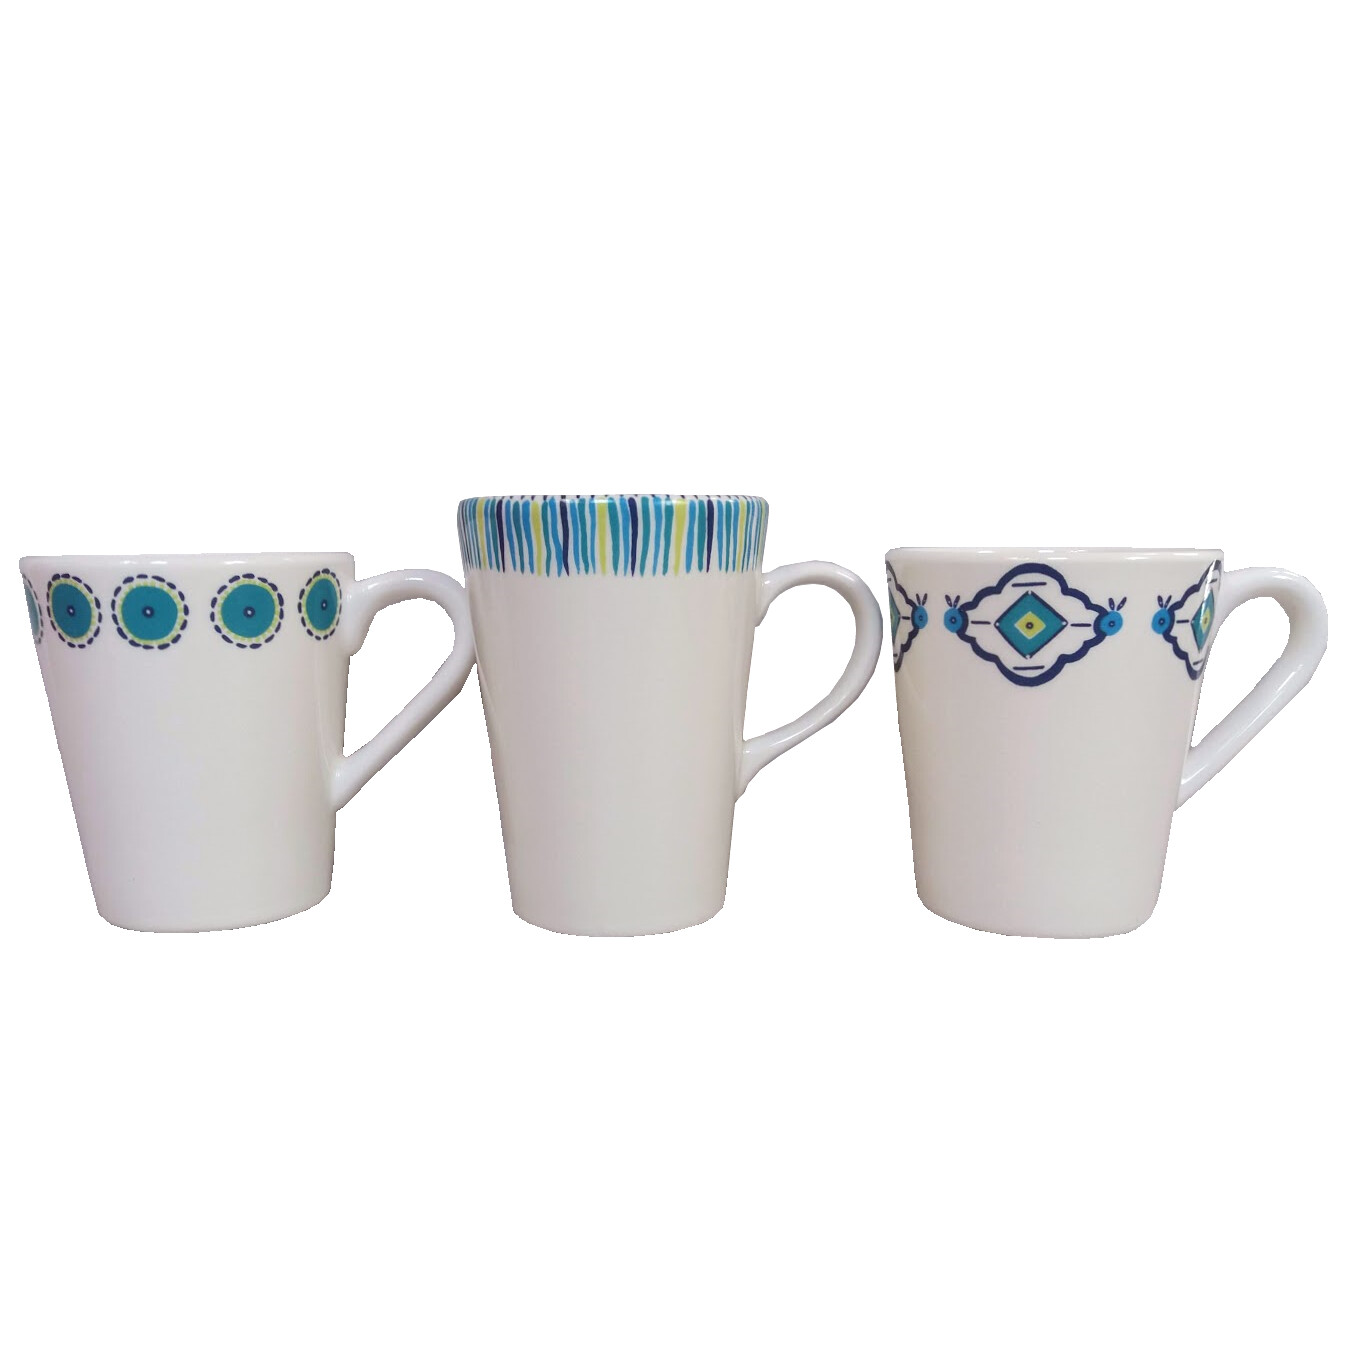 PENZO’s “Alhambra” Coffee Mugs Set of 3
FREE SHIPPING